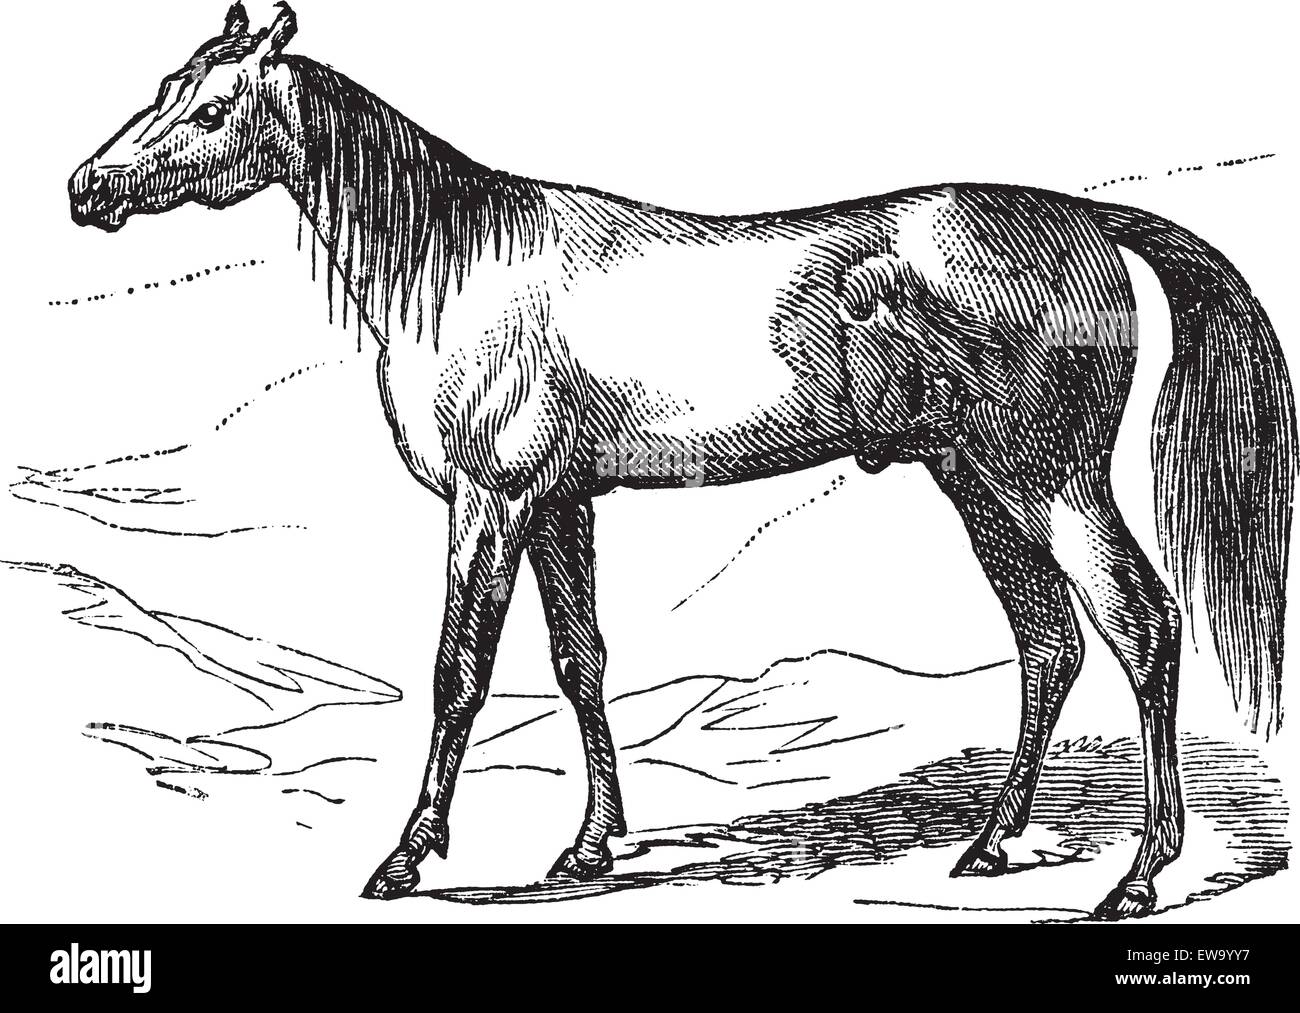 Arabian Horse or Arab Horse or Equus ferus caballus, vintage engraving. Old engraved illustration of Arabian Horse. Stock Vector